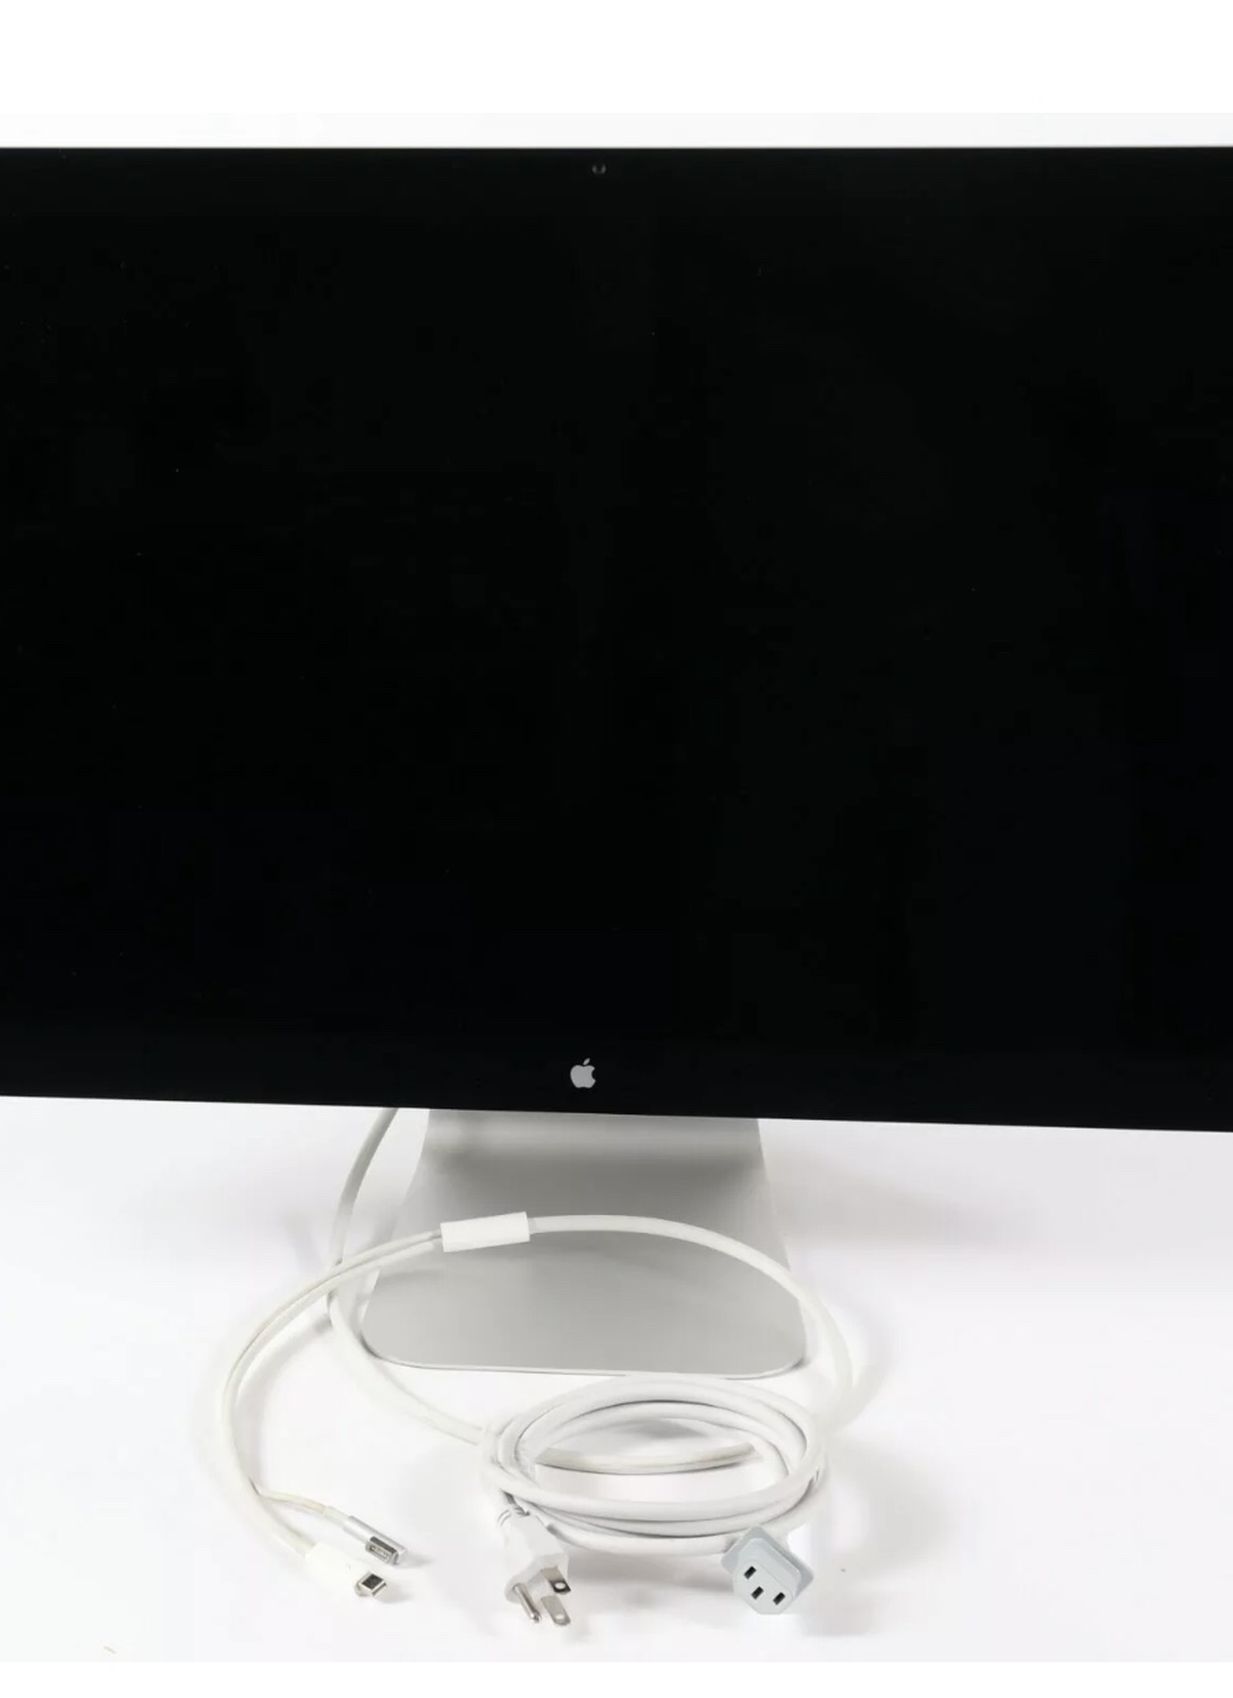 iMac thunderbolt Apple Thunderbolt Display A1407 27 Inch 2560x1440 LCD Widescreen Monitor w/ Cord